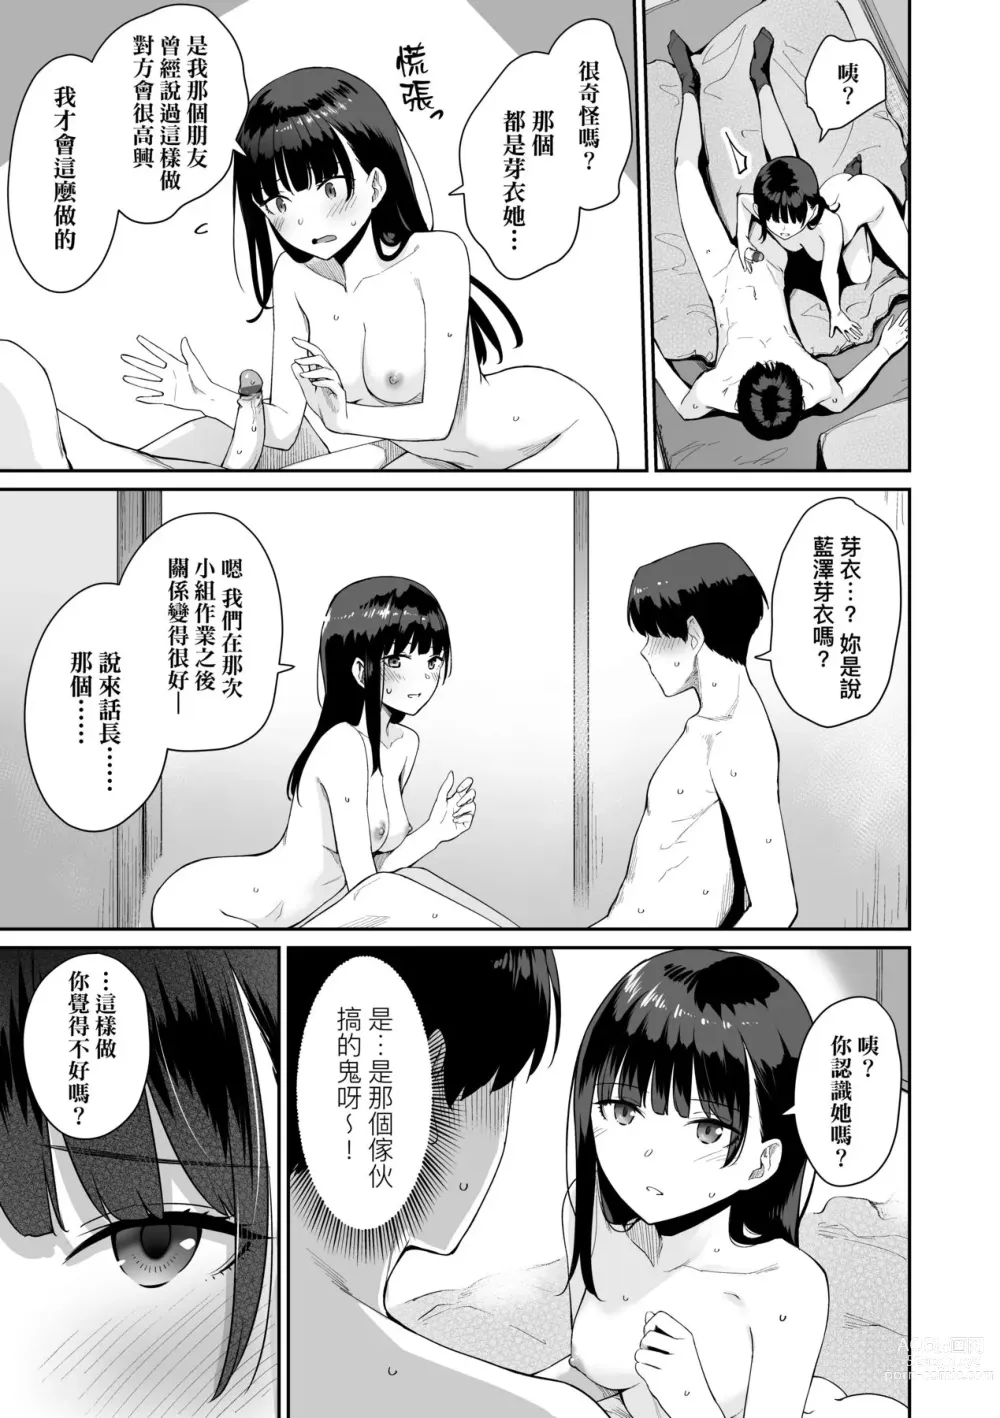 Page 208 of manga 家裡兄弟唯獨只有我沒能SEX